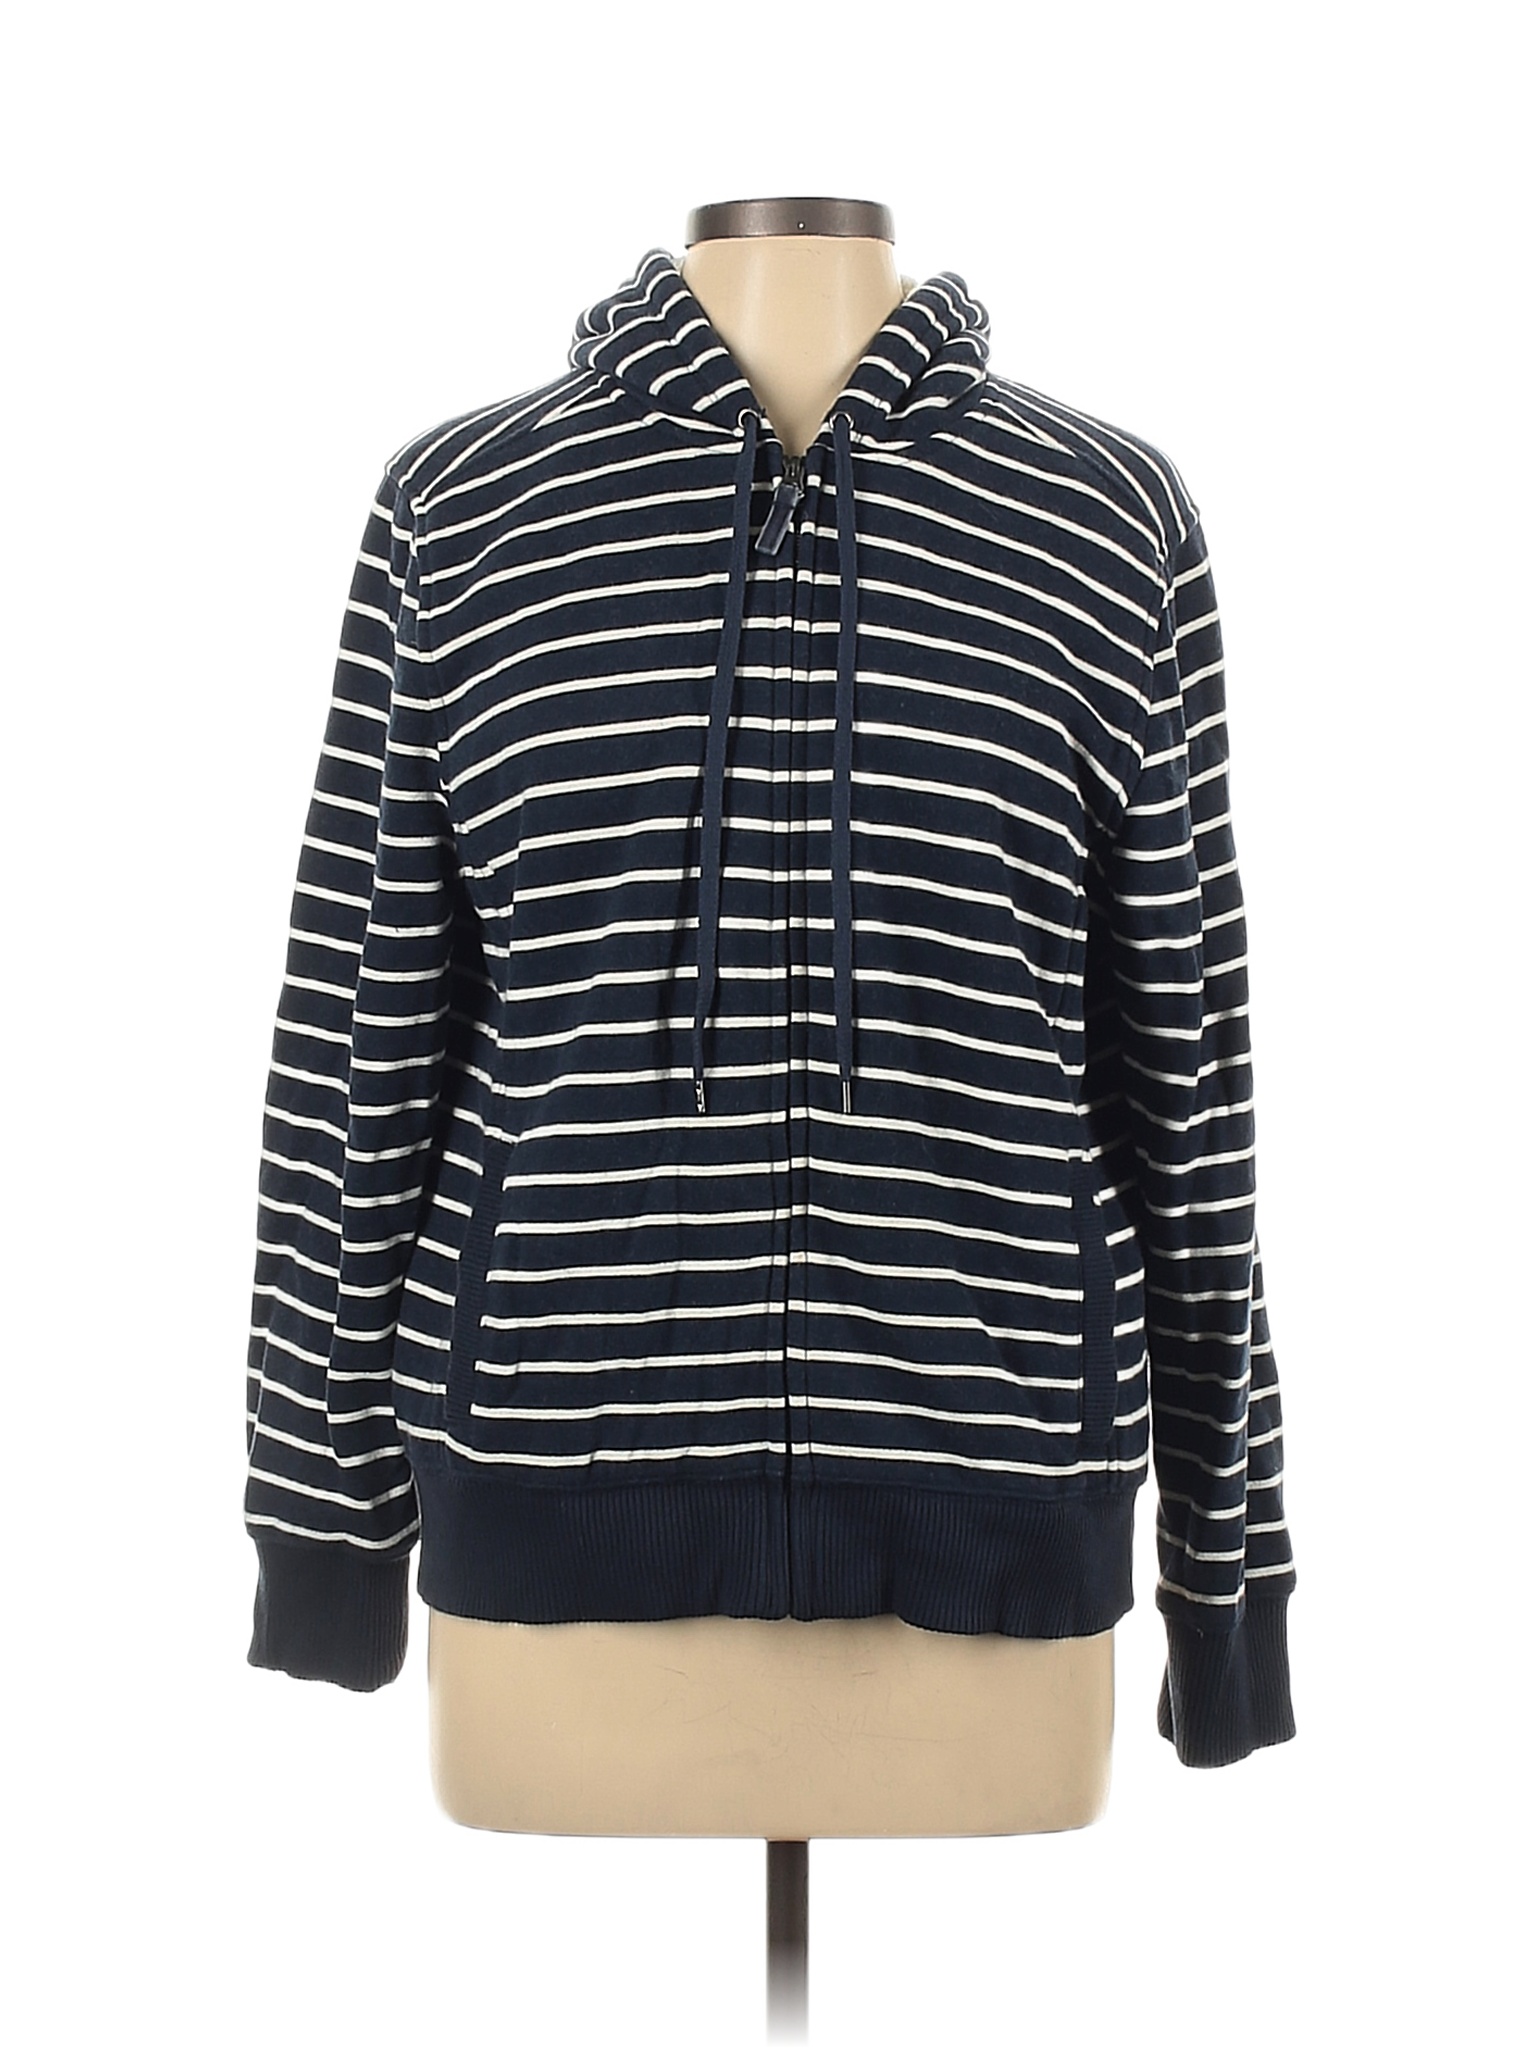 L.L.Bean Stripes Blue Jacket Size L - 60% off | thredUP